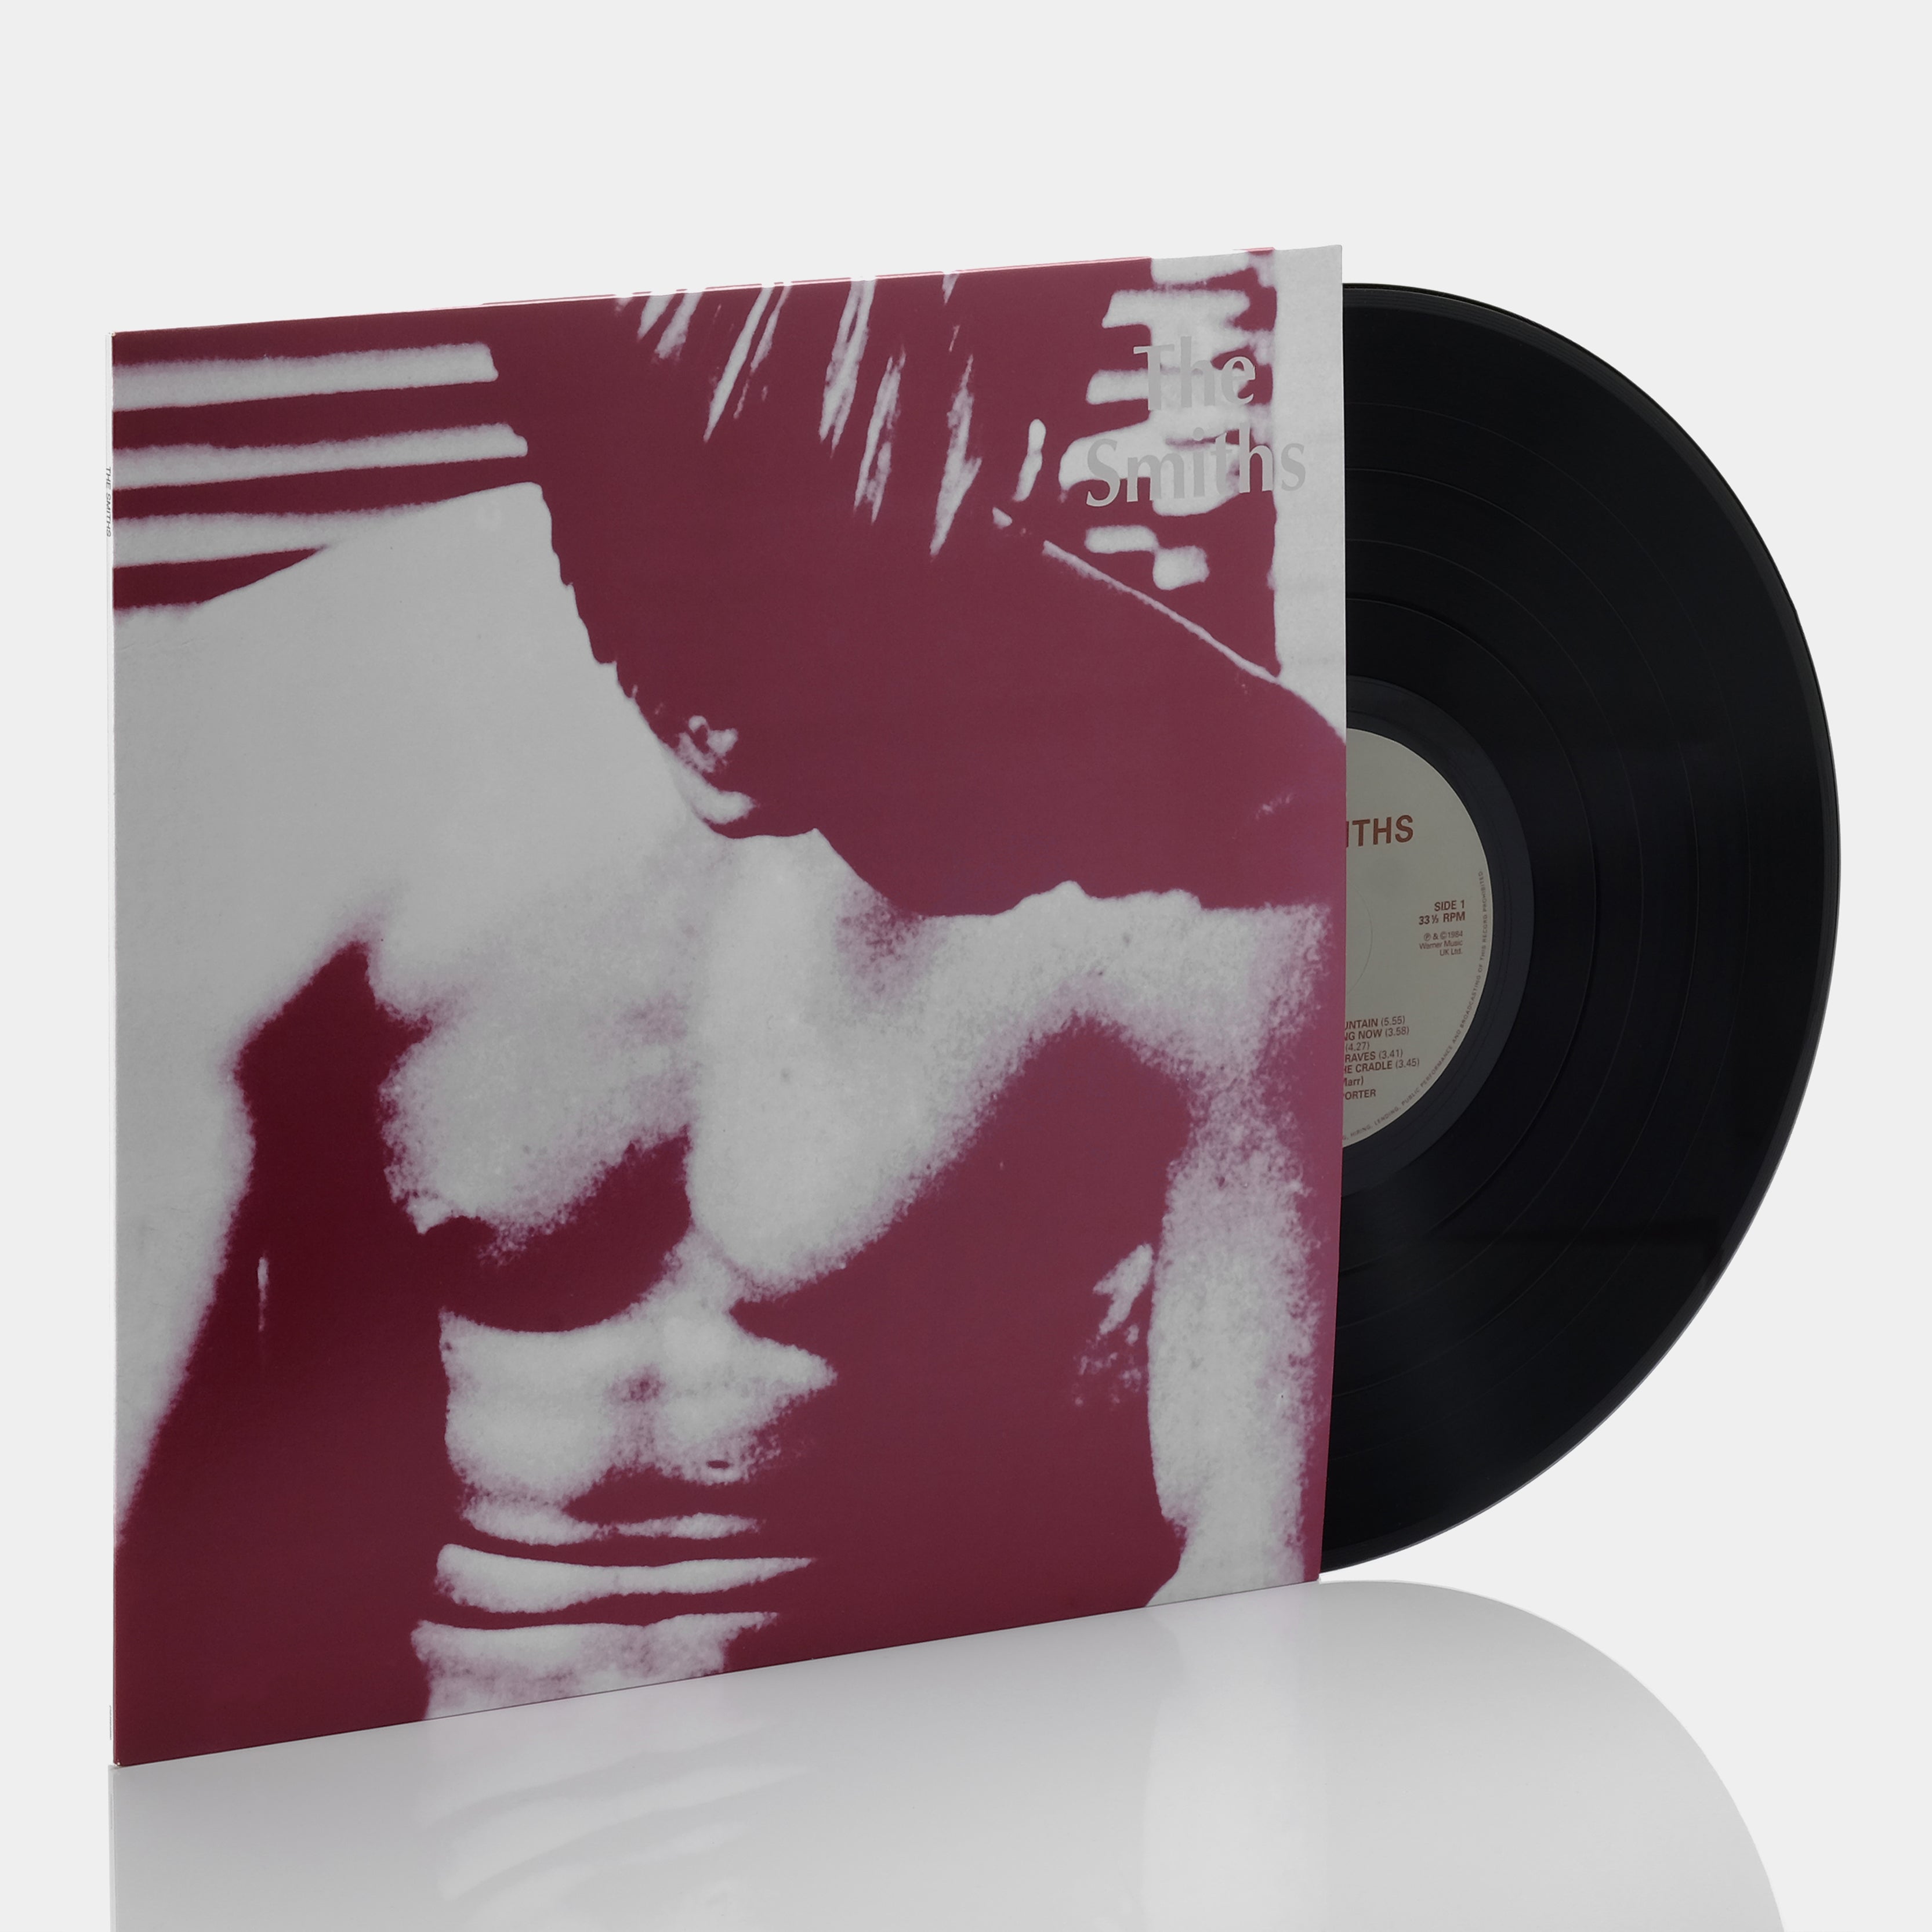 The Smiths - The Smiths LP Vinyl Record